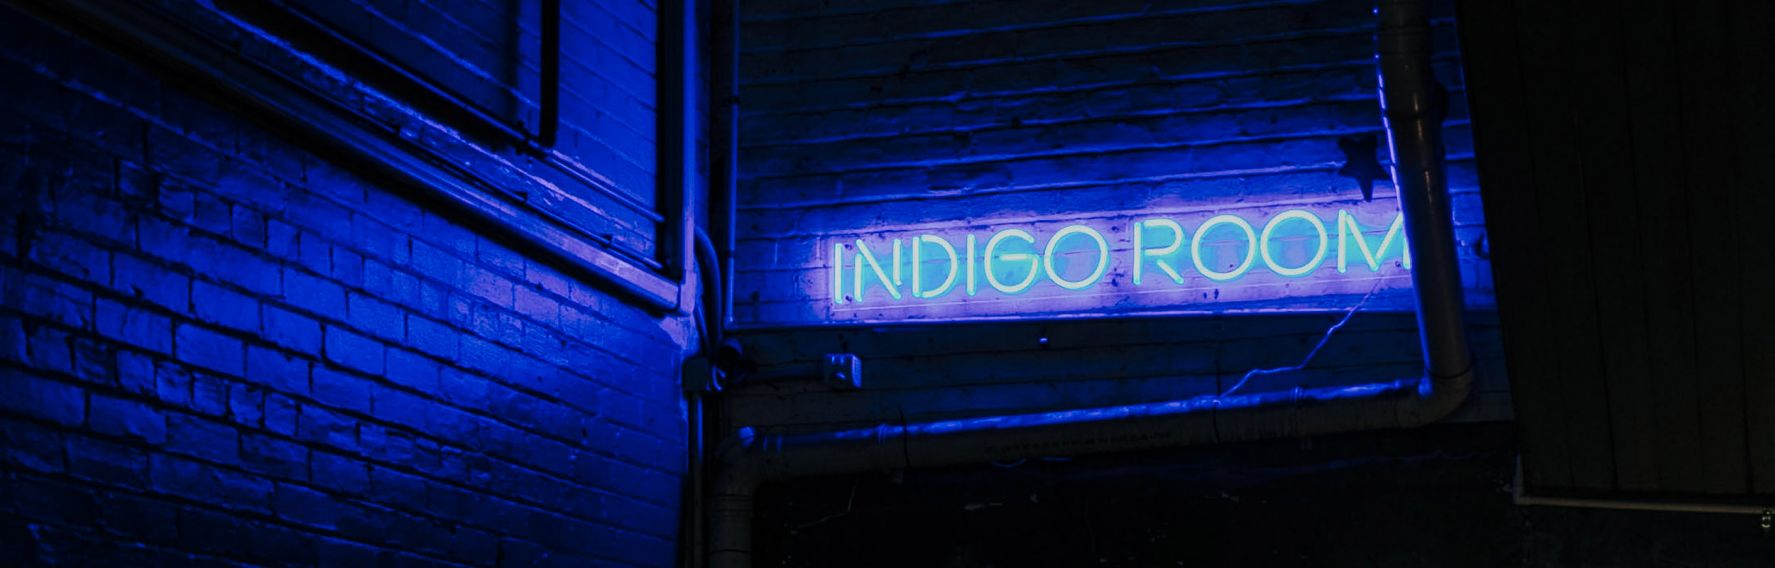 Indigo Room